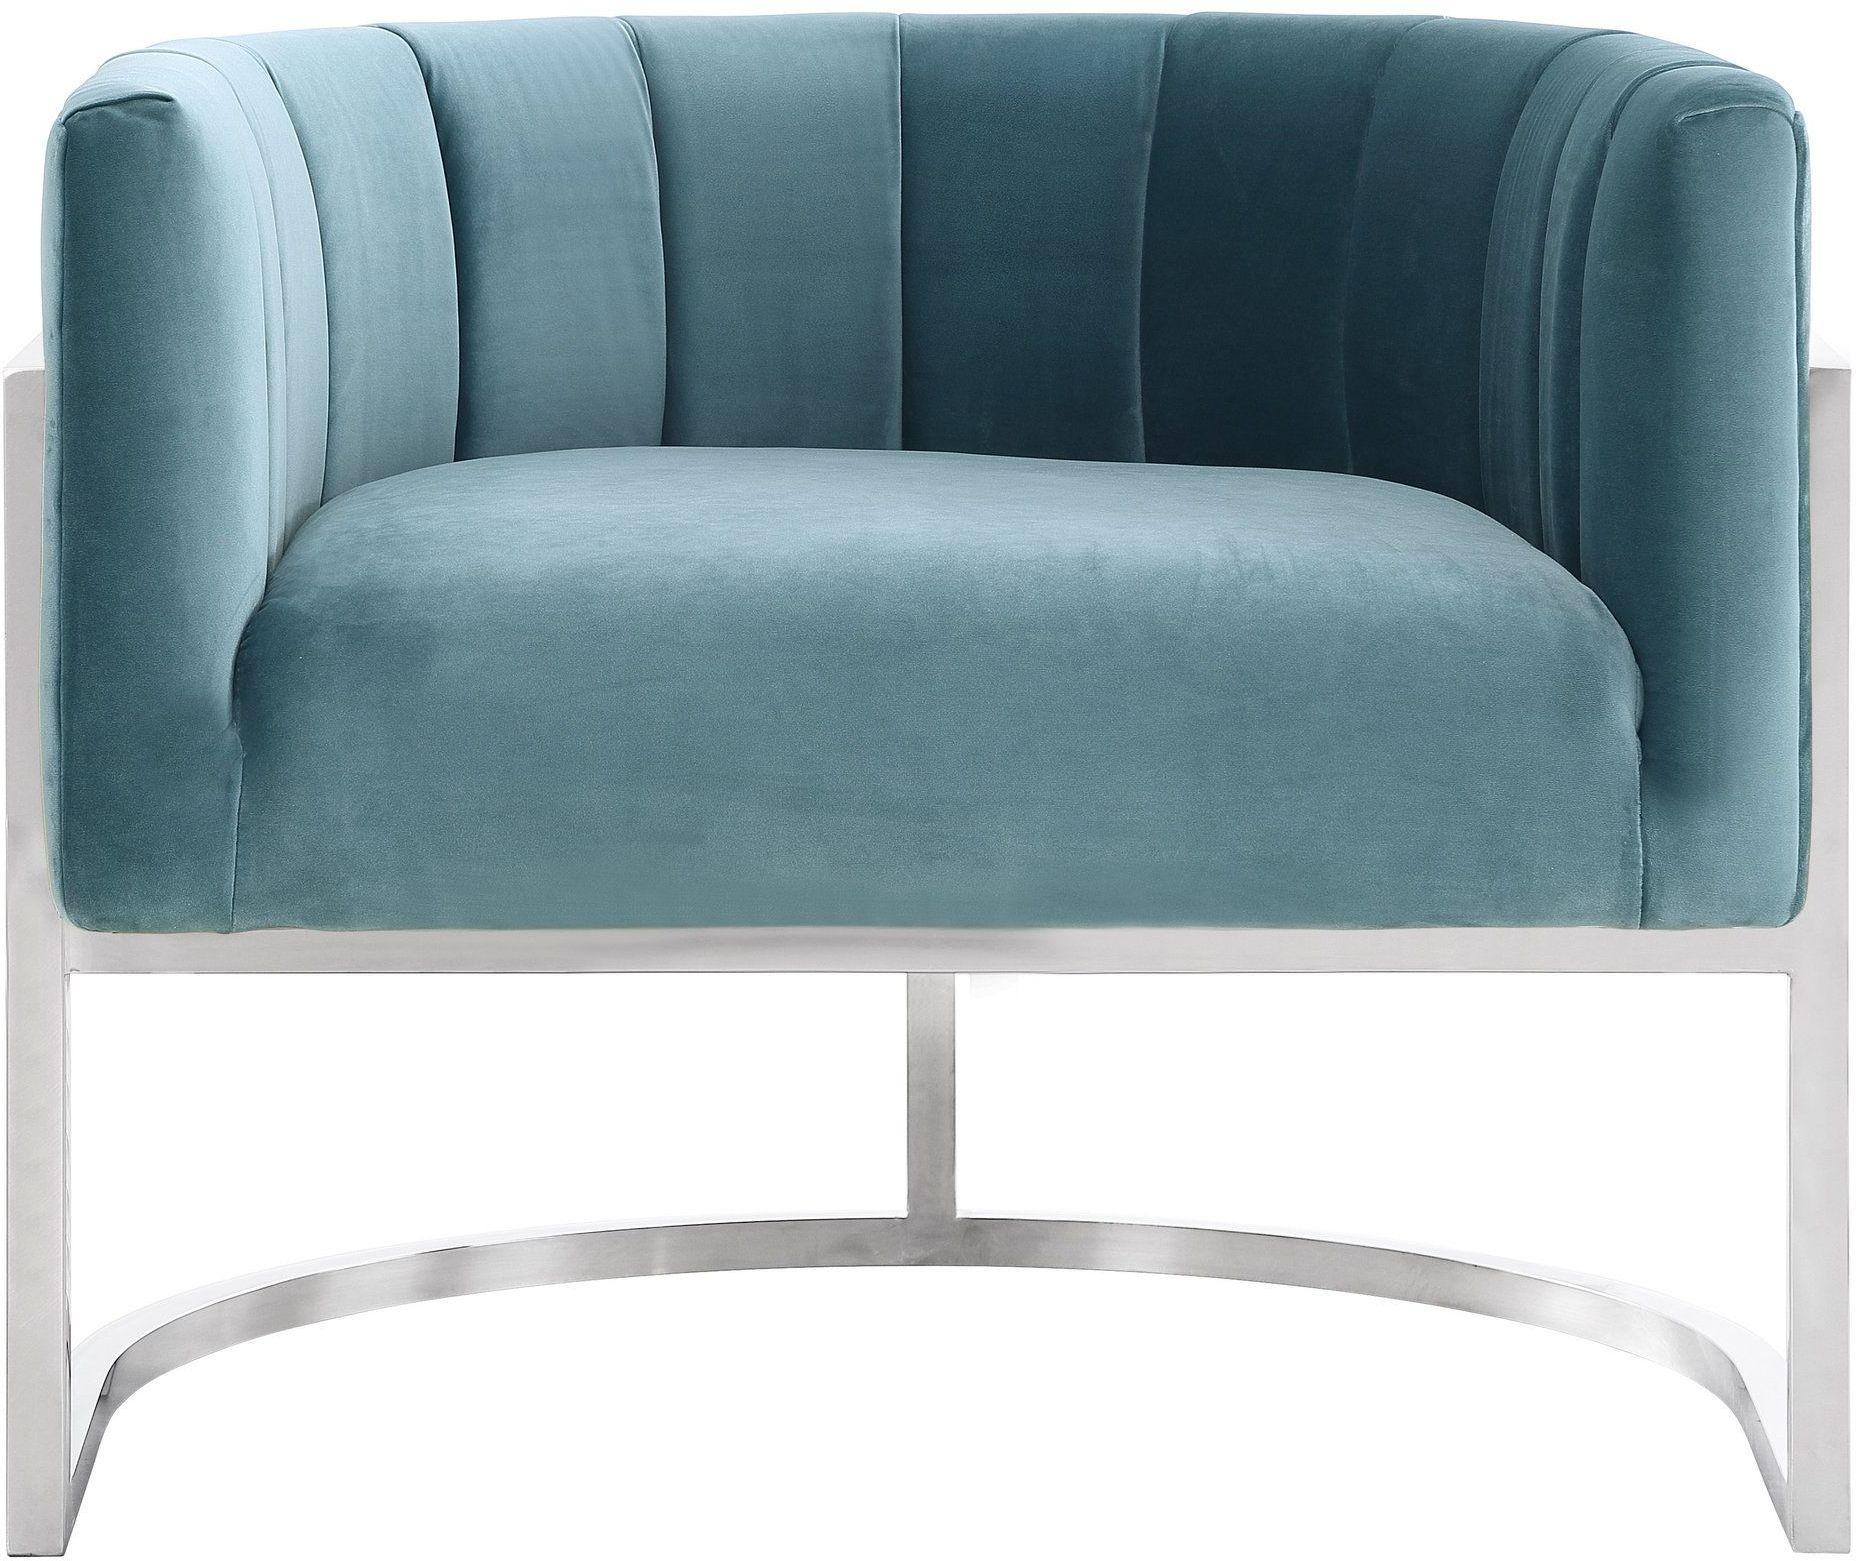 Tov Furniture Magnolia Sea Blue Chair with Silver Base